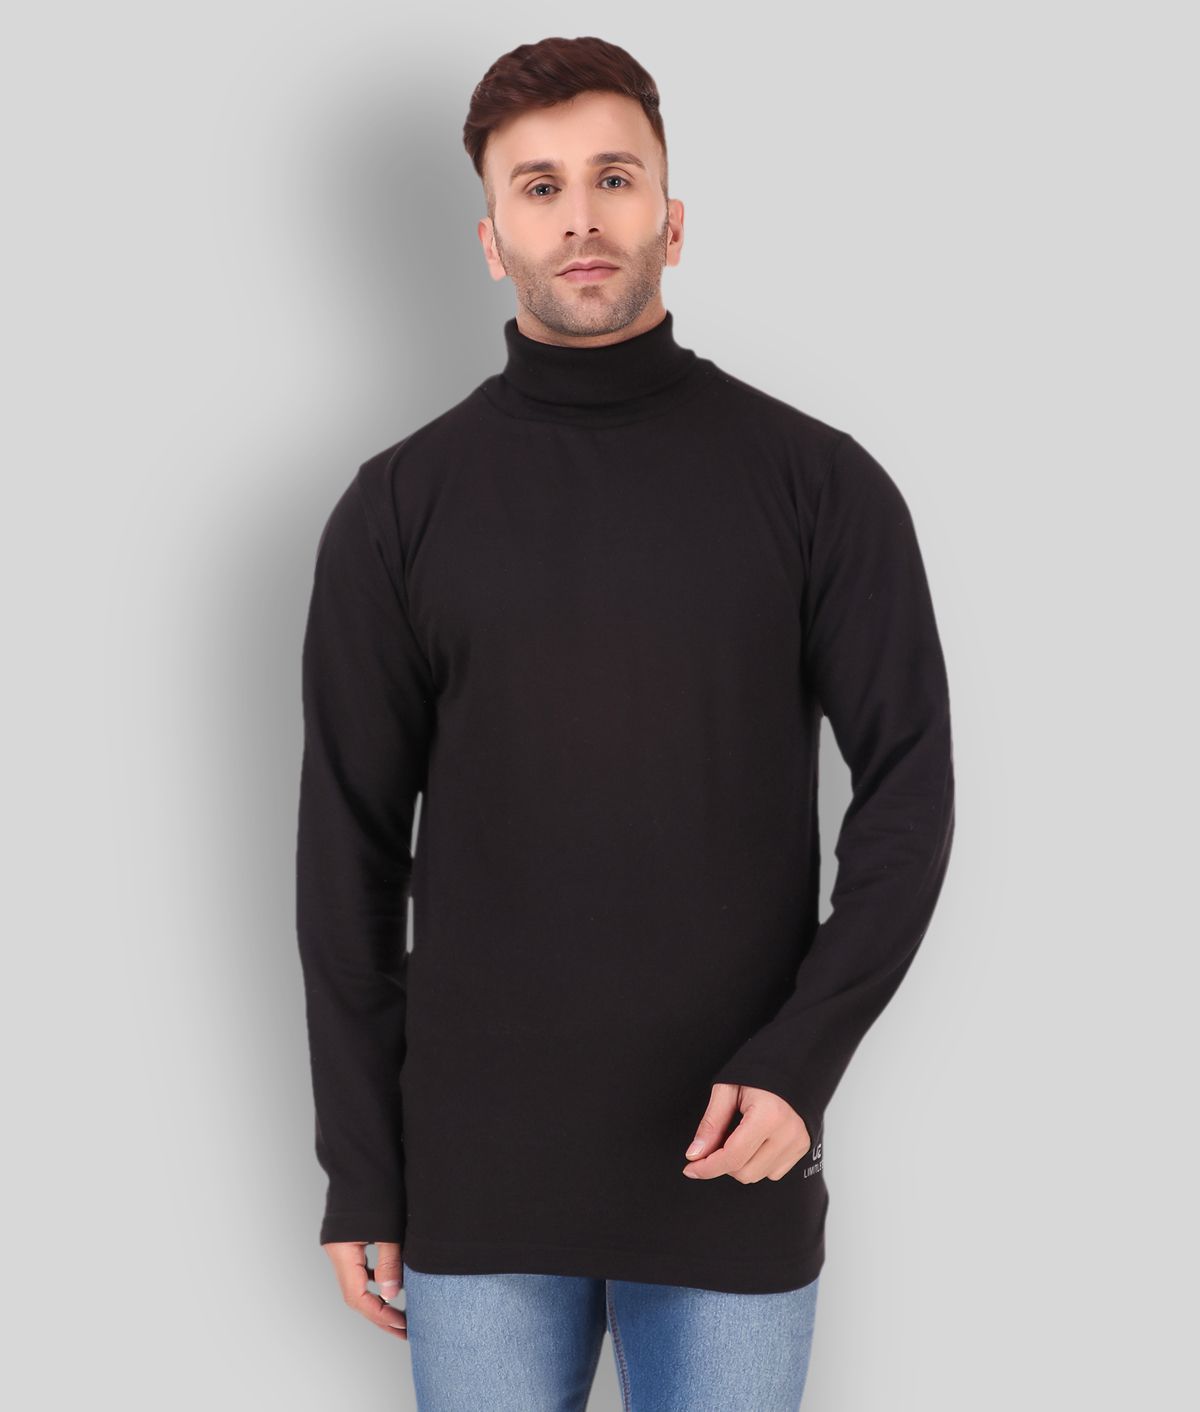 Uzarus - Black Cotton Blend Regular Fit  Men's T-Shirt ( Pack of 1 )